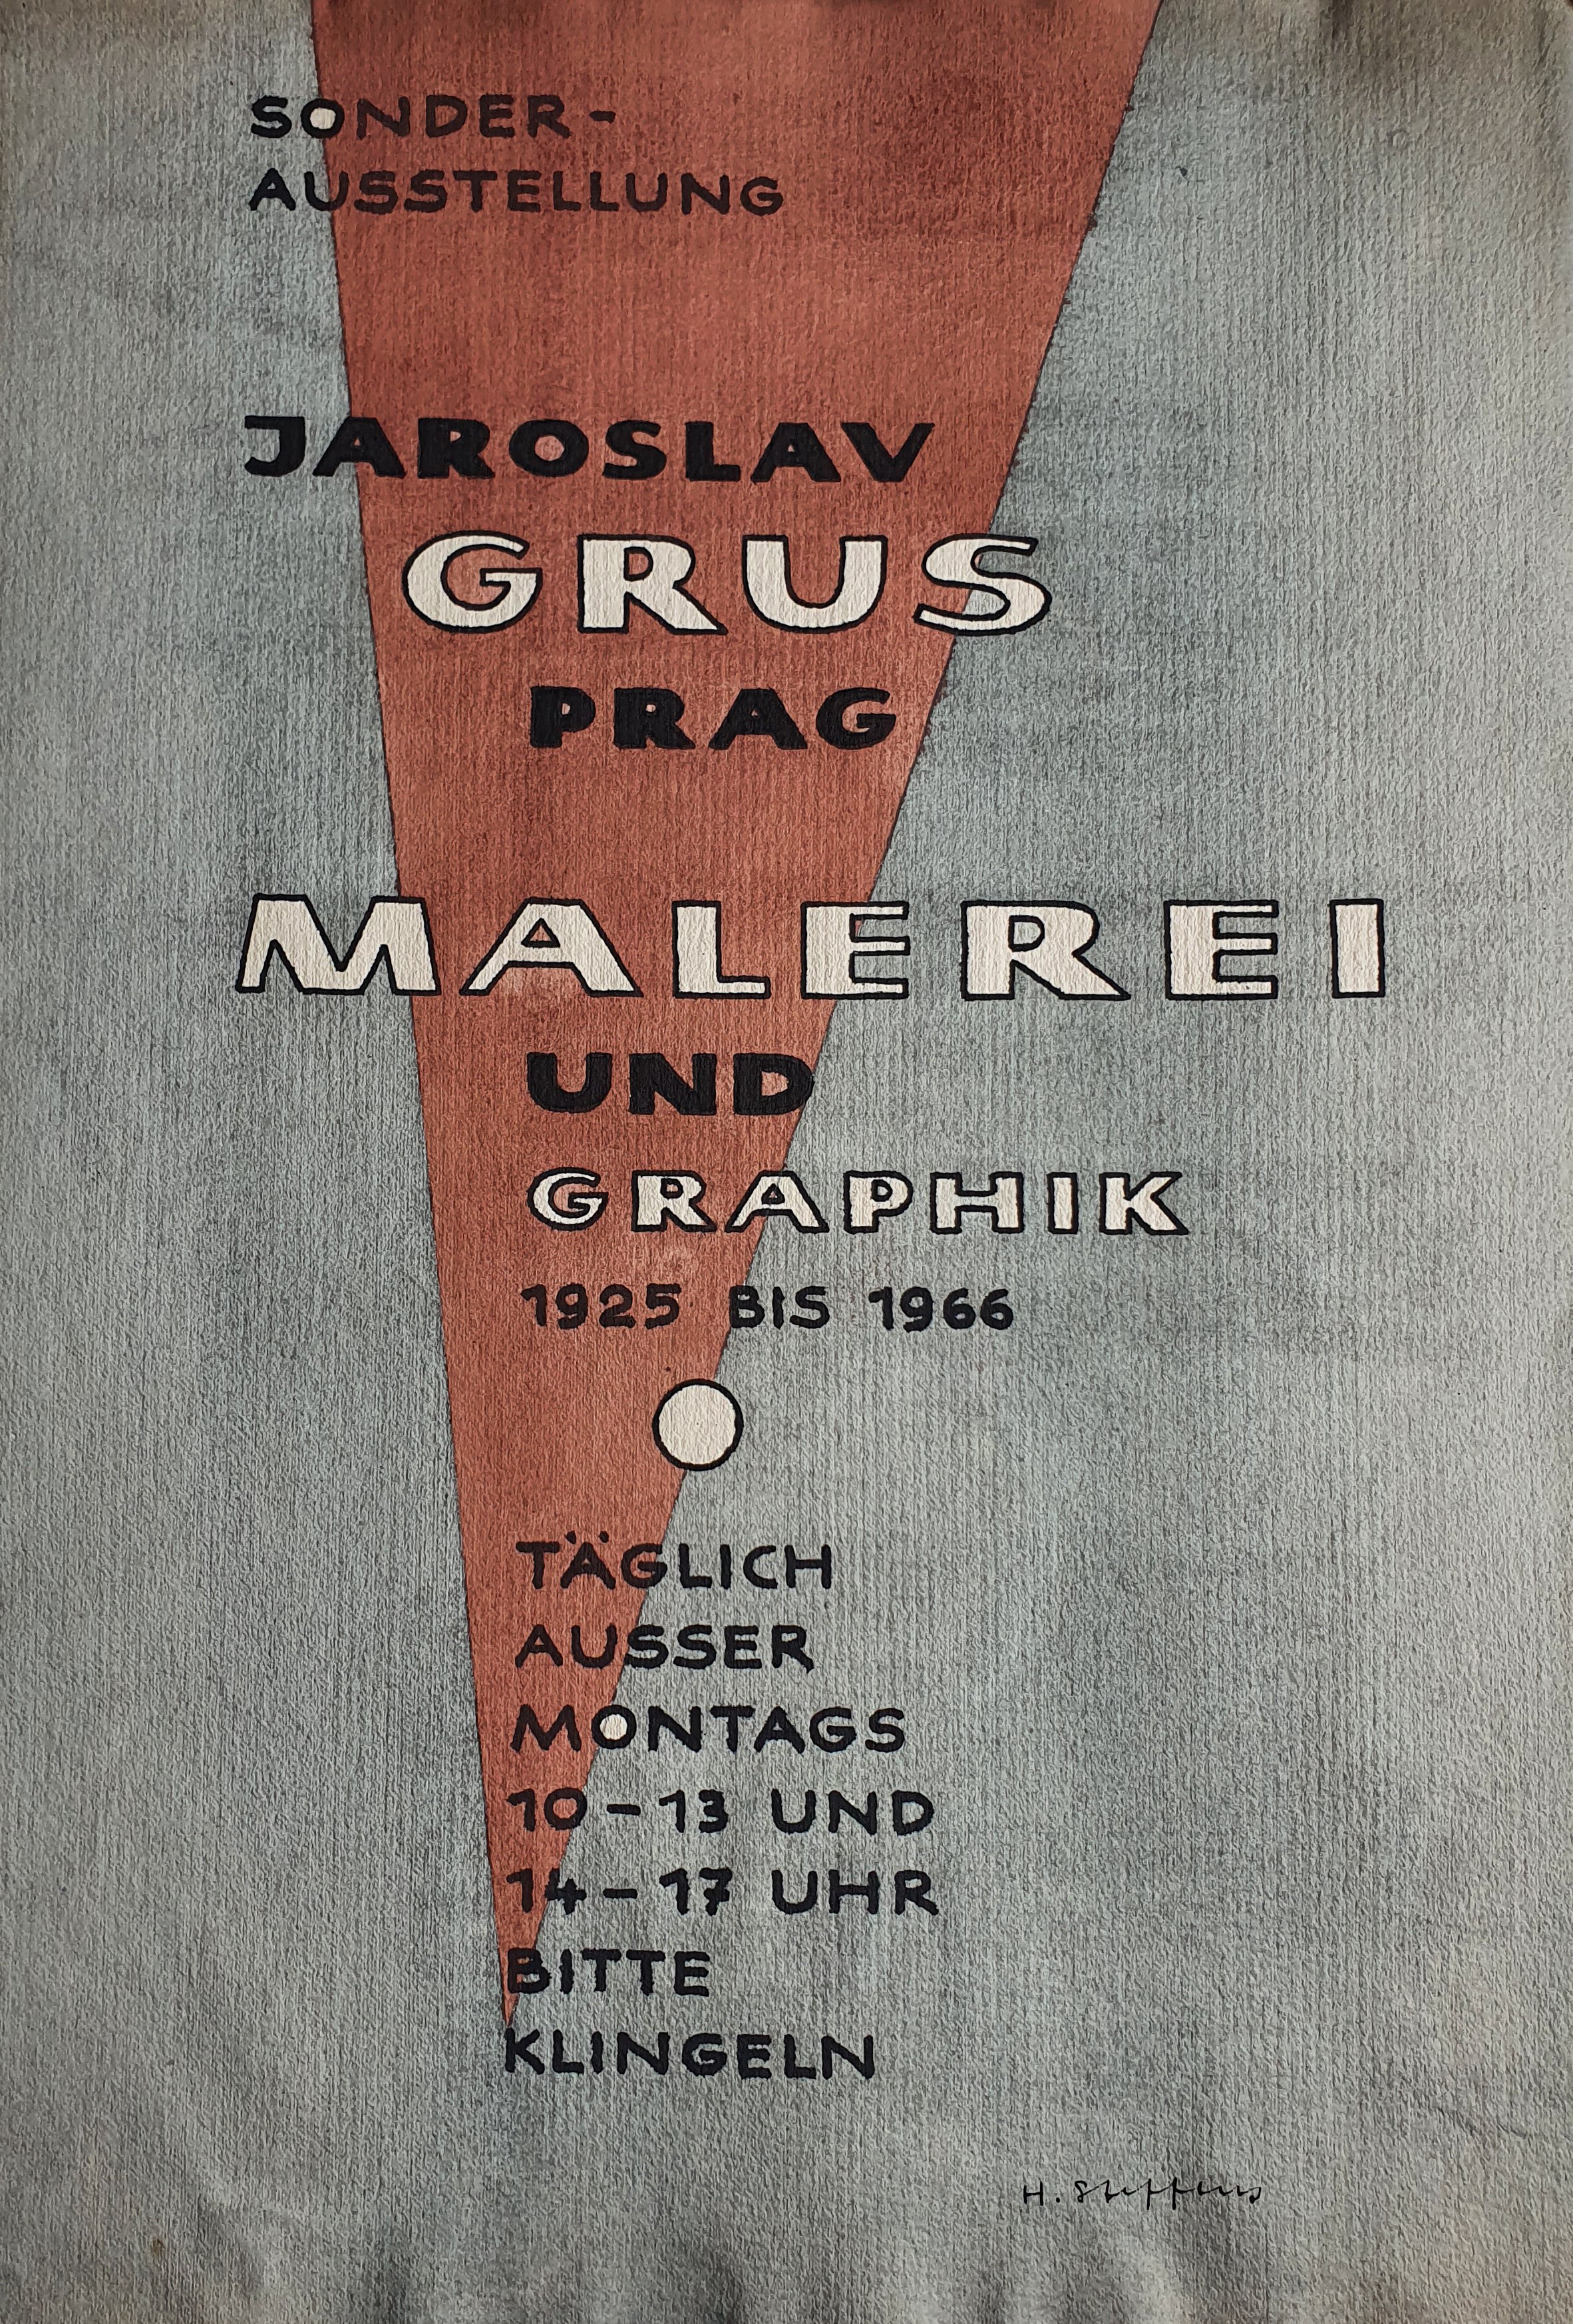 Sonderausstellung Jaroslav Grus, Prag - Malerei und Graphik 1925 bis 1966 (Museum Schloss Bernburg CC BY-NC-SA)